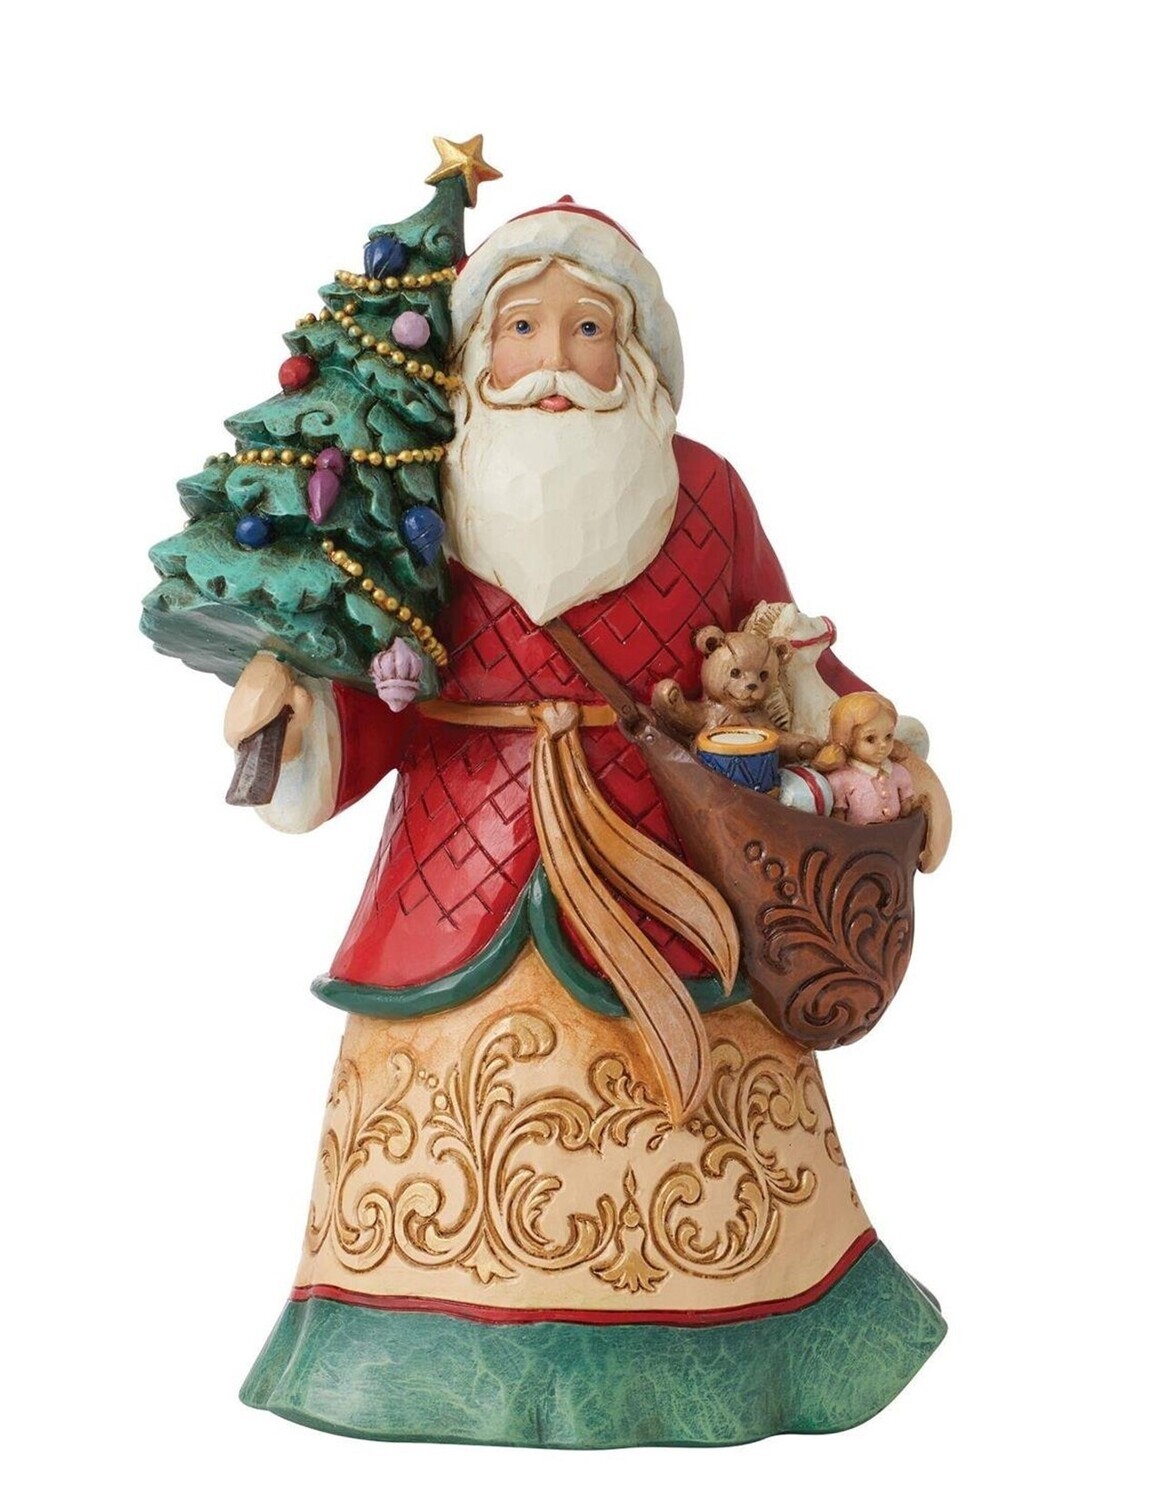 Jim Shore Heartwood Creek "Sharing Merriment and Cheer" Santa Figurine (6012904)